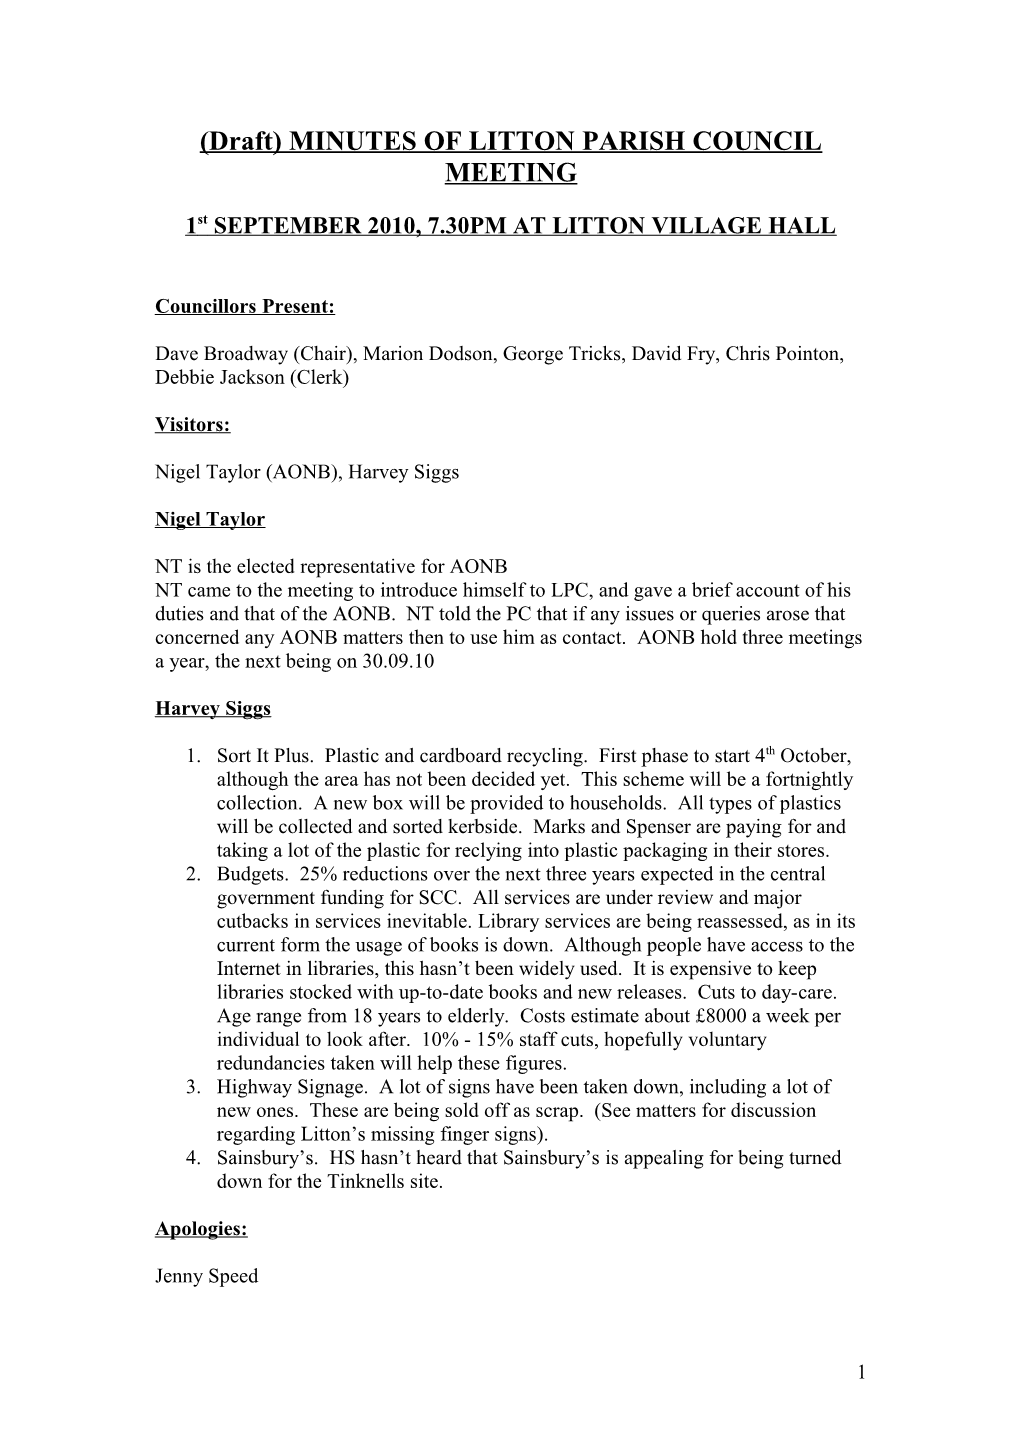 (Draft) Minutes of Litton Parish Council Meeting s1